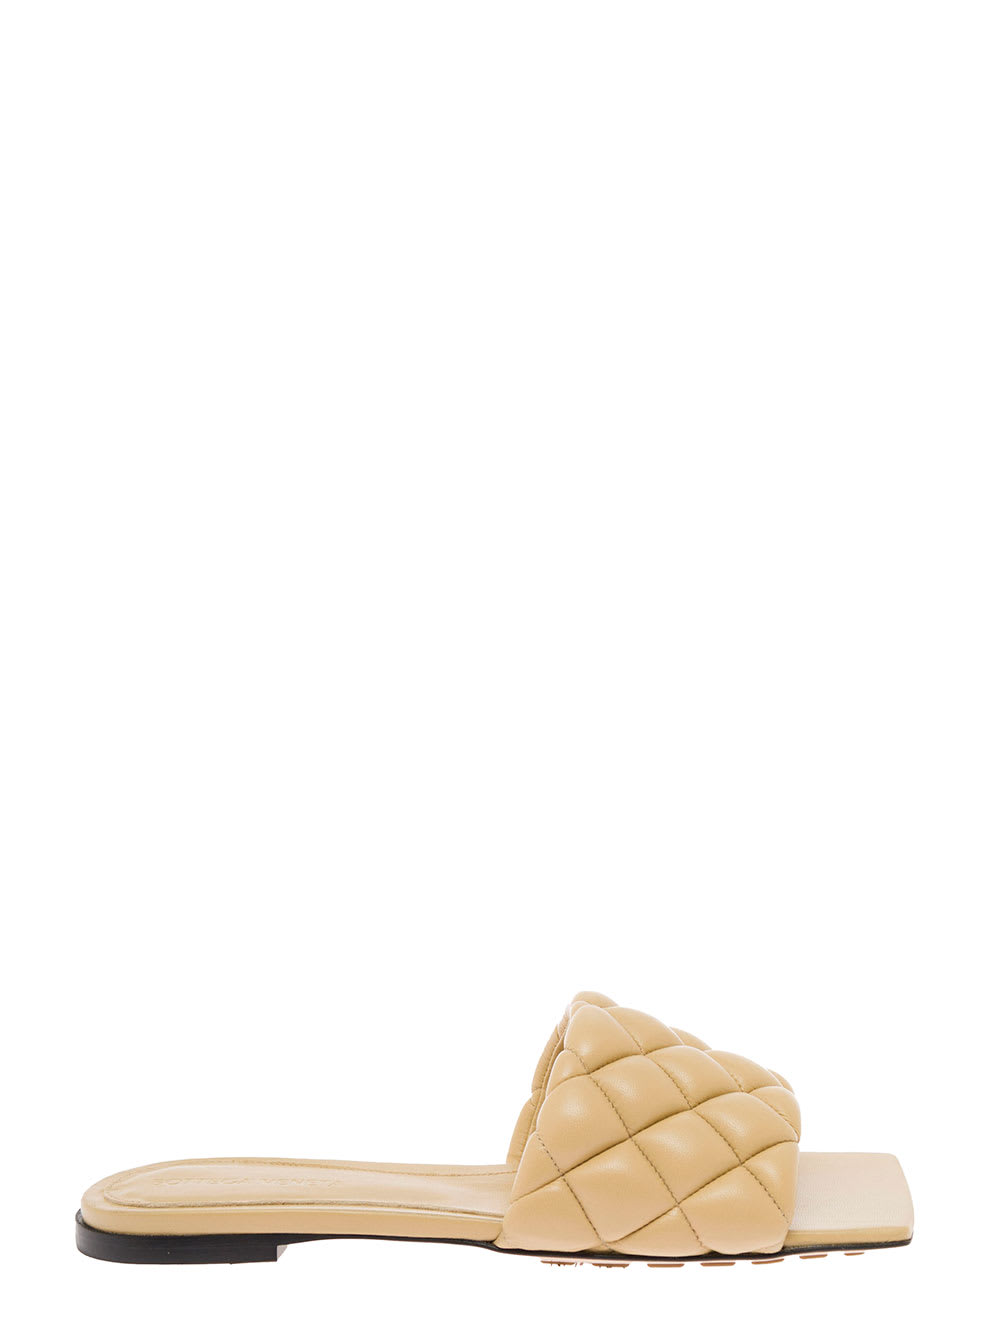 Bottega Veneta Beige Quilted Leather Slide Sandals Bottega Veneta Woman